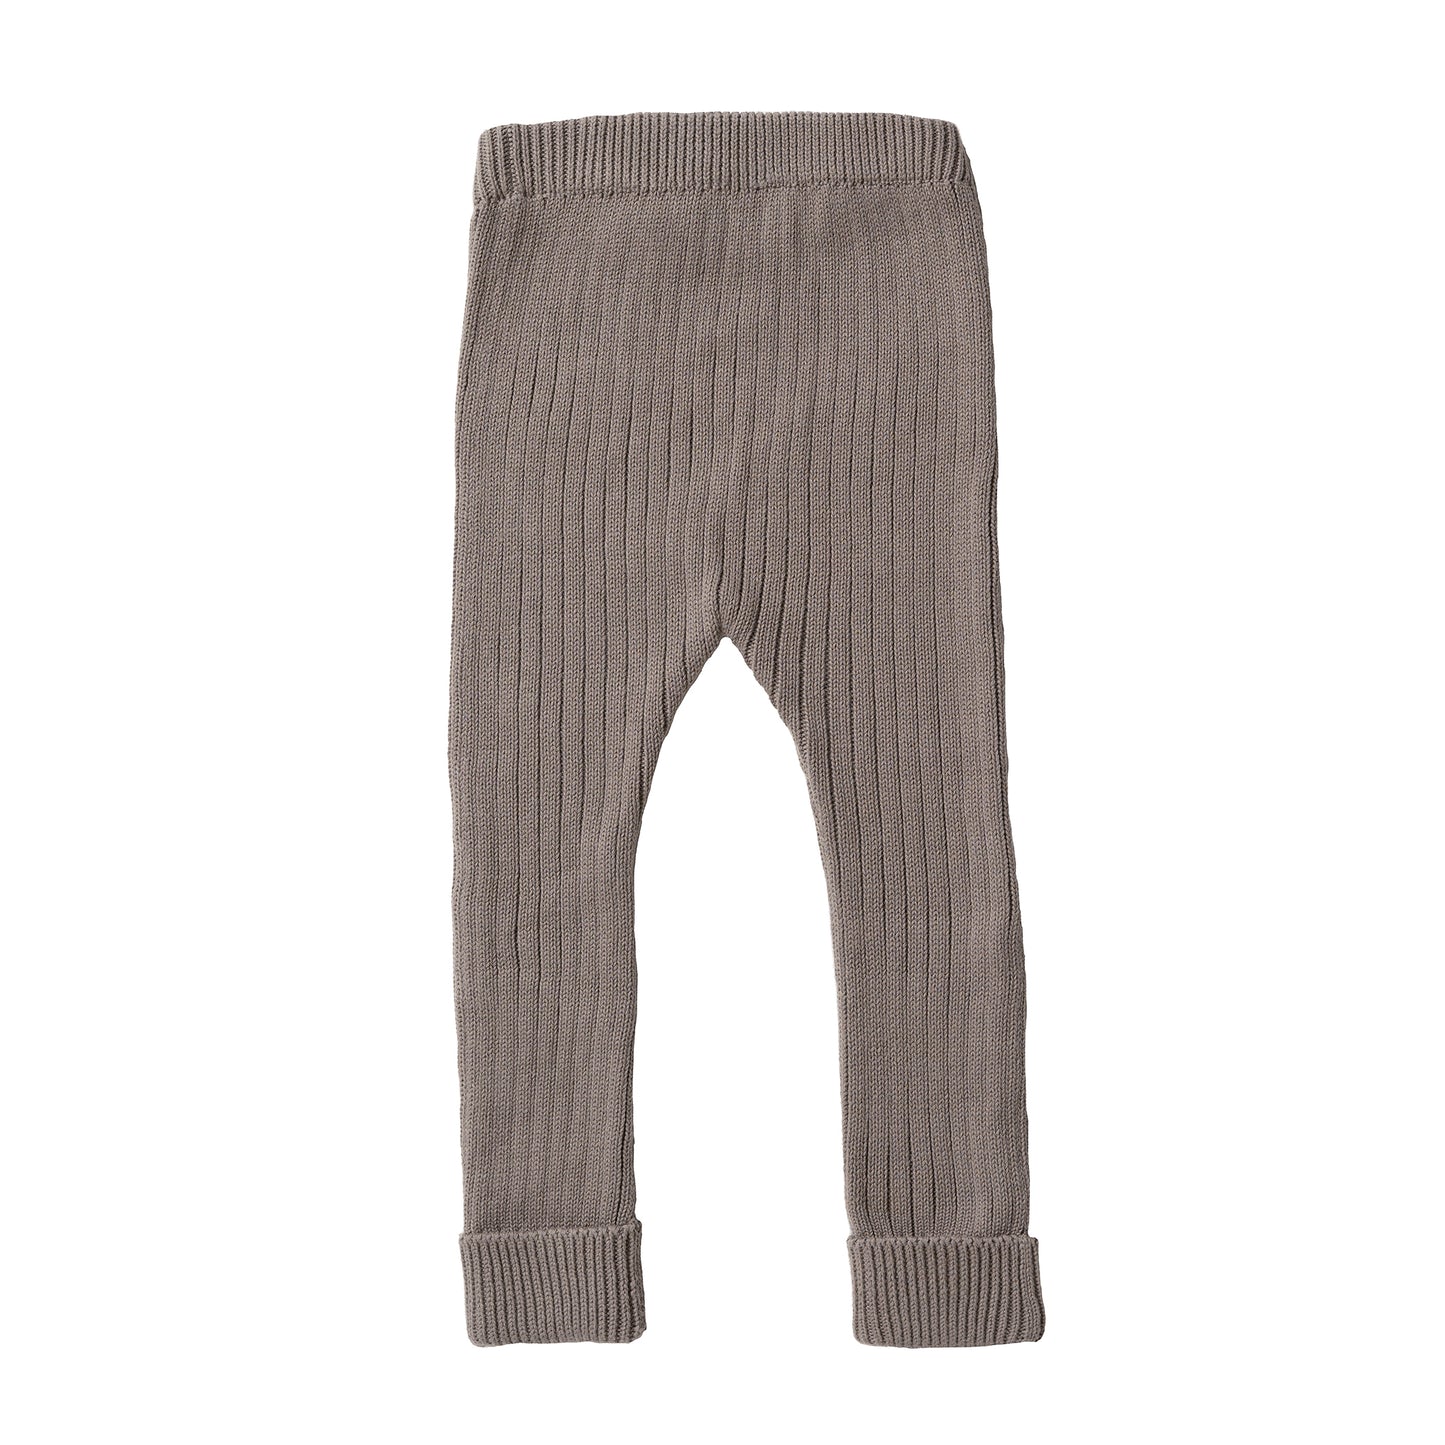 Hanevild - Lynge leggings - Warm grey